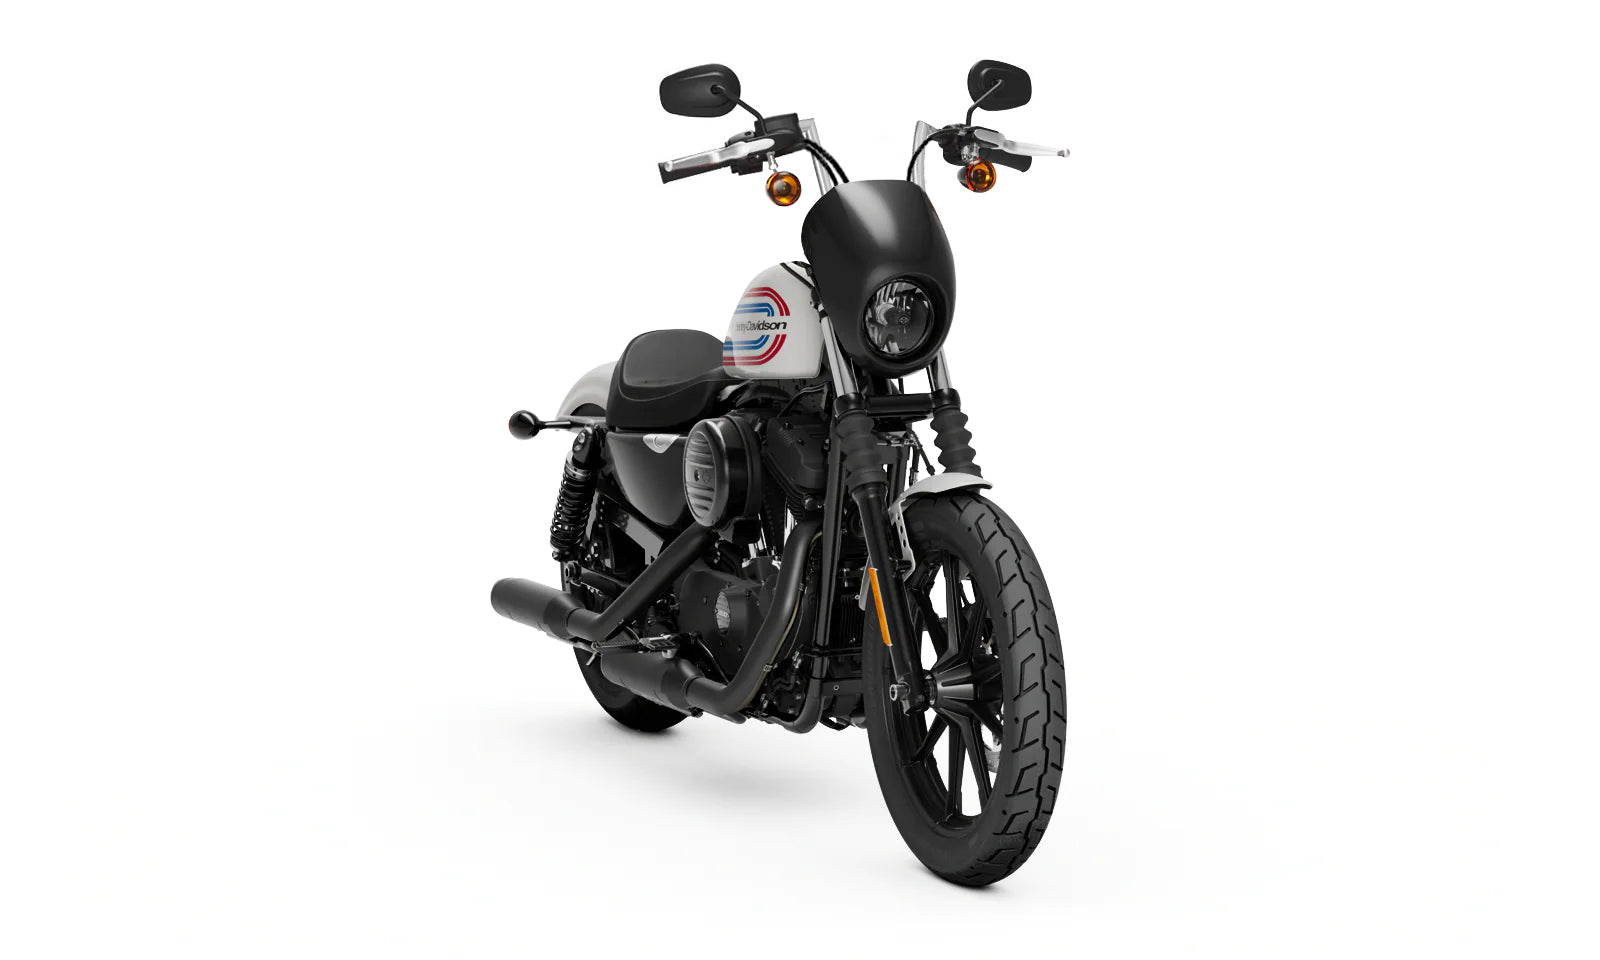 Viking Iron Born 9" Handlebar for Harley Sportster Iron 1200 Chrome Bag on Bike View @expand